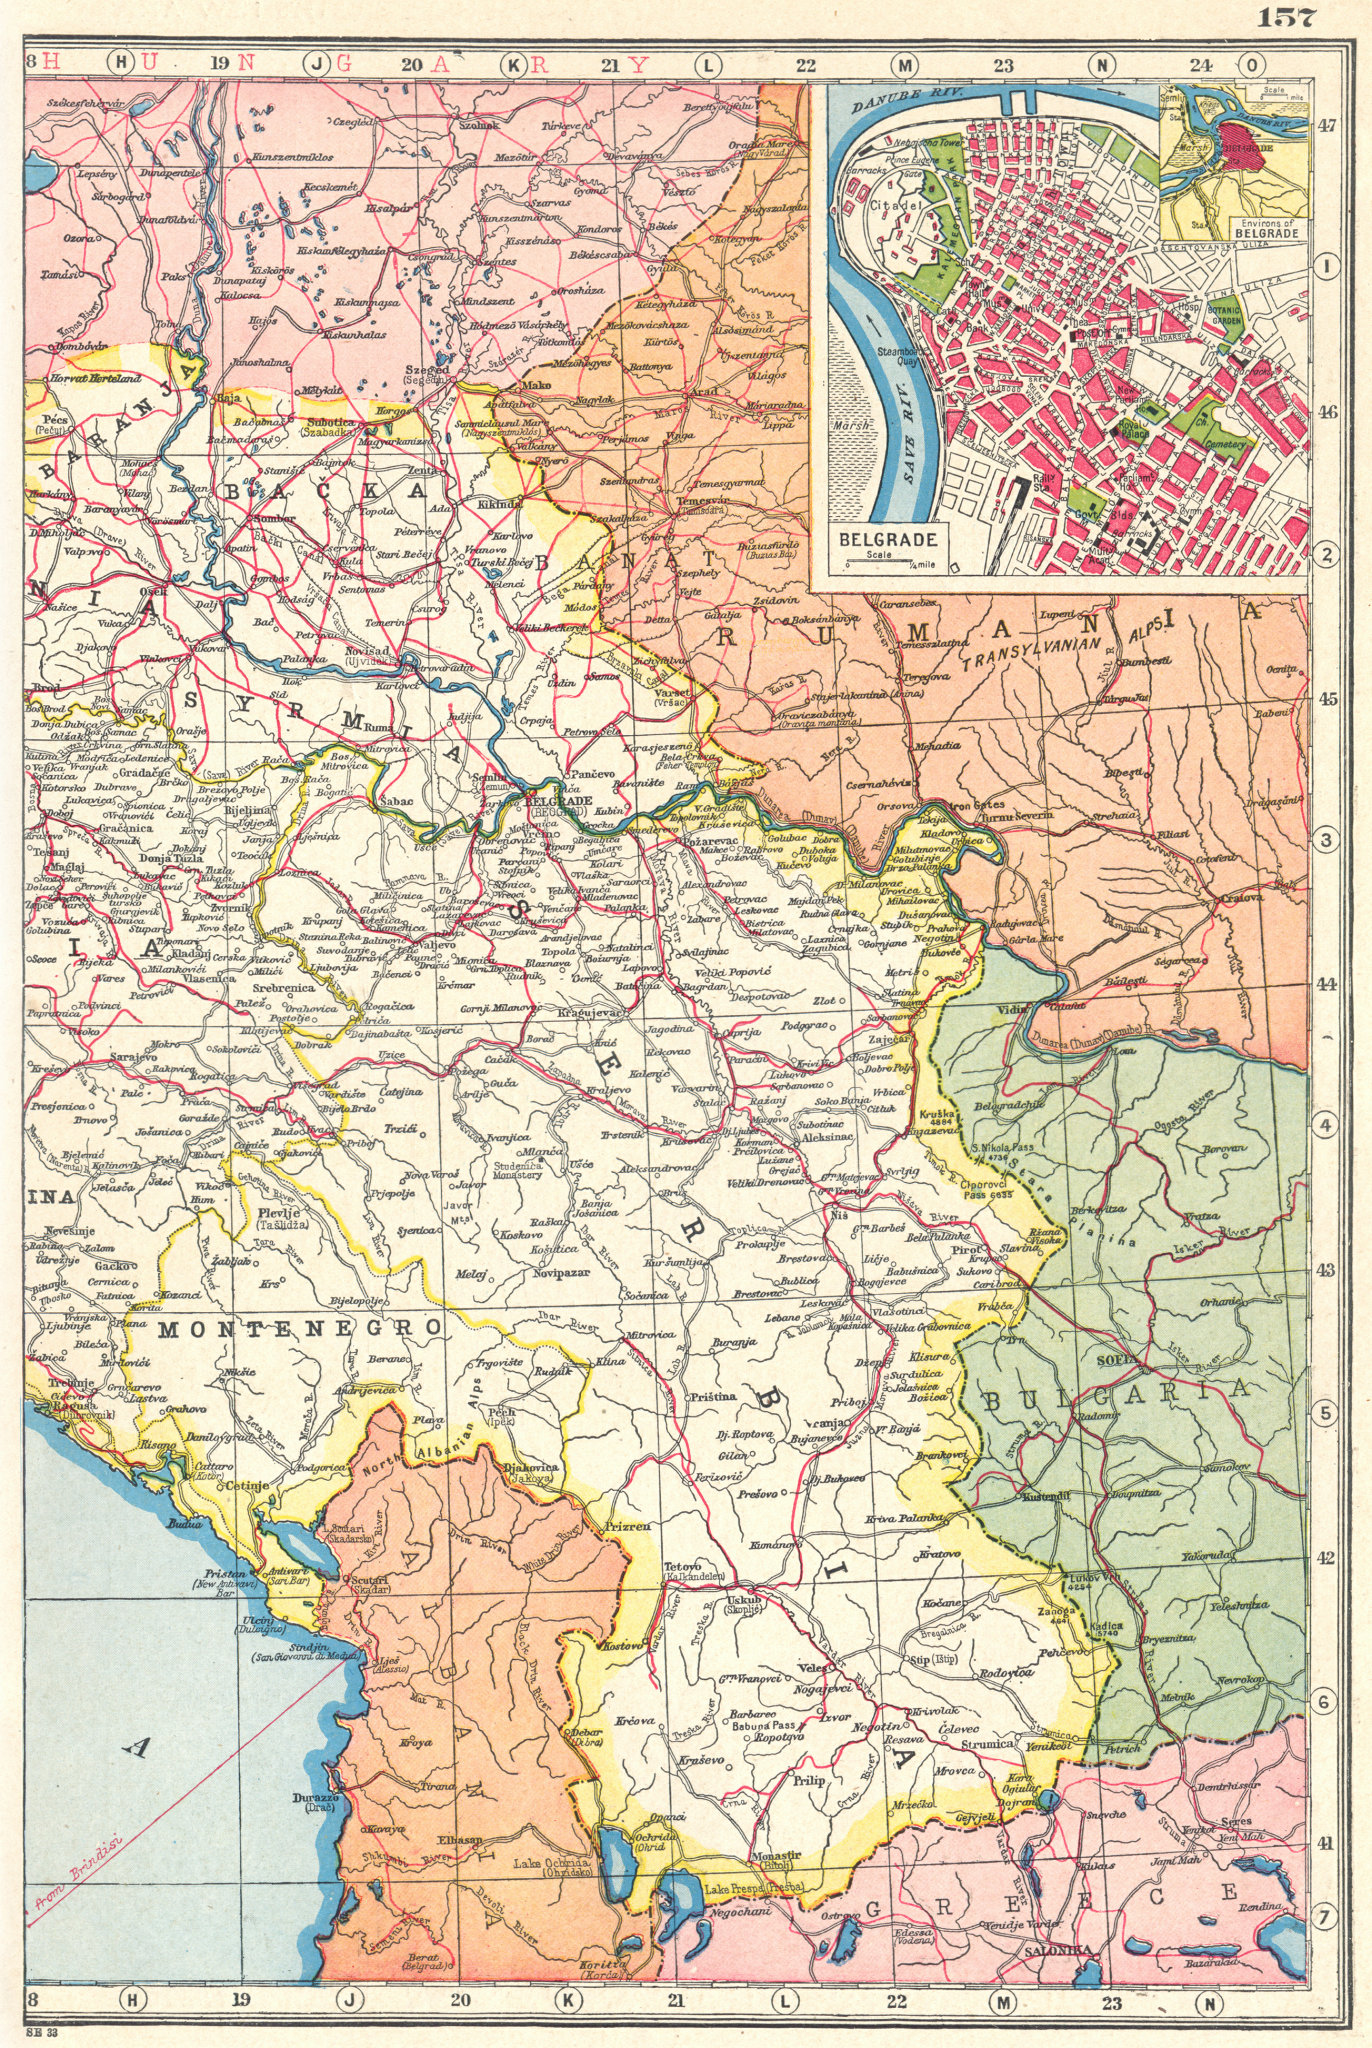 Associate Product SERBIA. Montenegro; Yugoslavia East. inset Belgrade plan. HARMSWORTH 1920 map